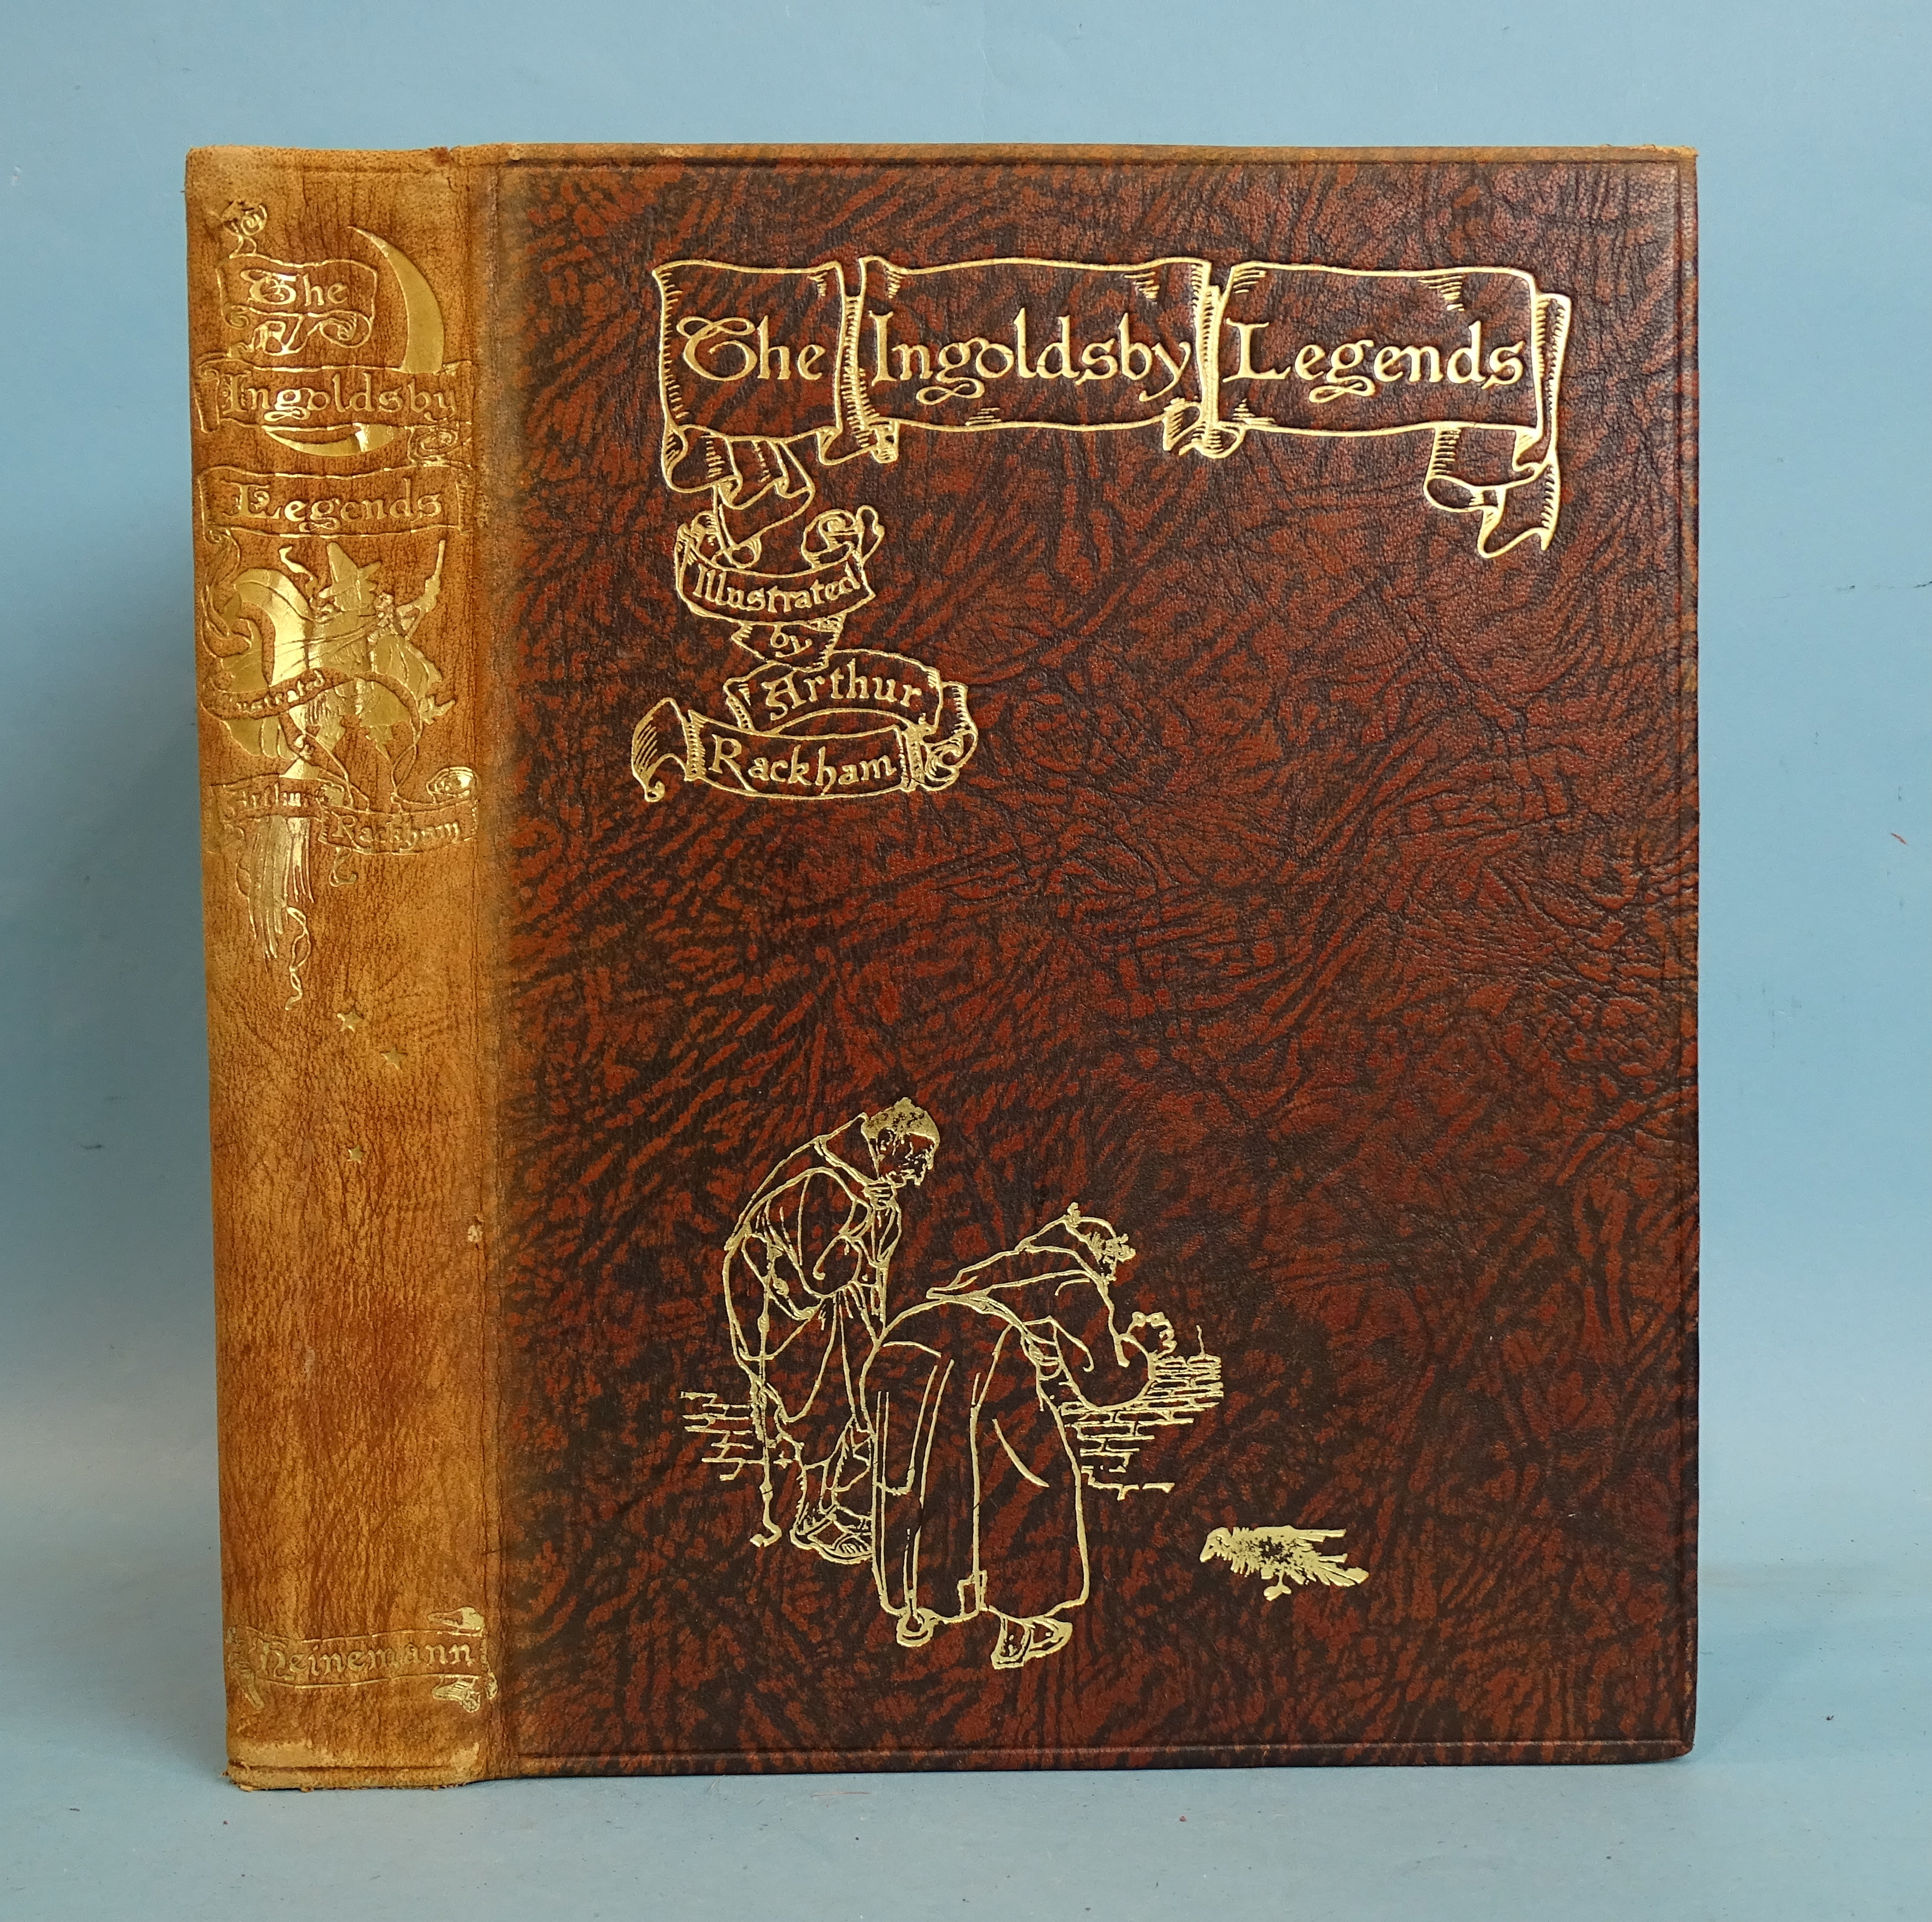 Rackham (Arthur, Illus.), The Ingoldsby Legends or Mirth & Marvels by Thomas Ingoldsby, twenty-